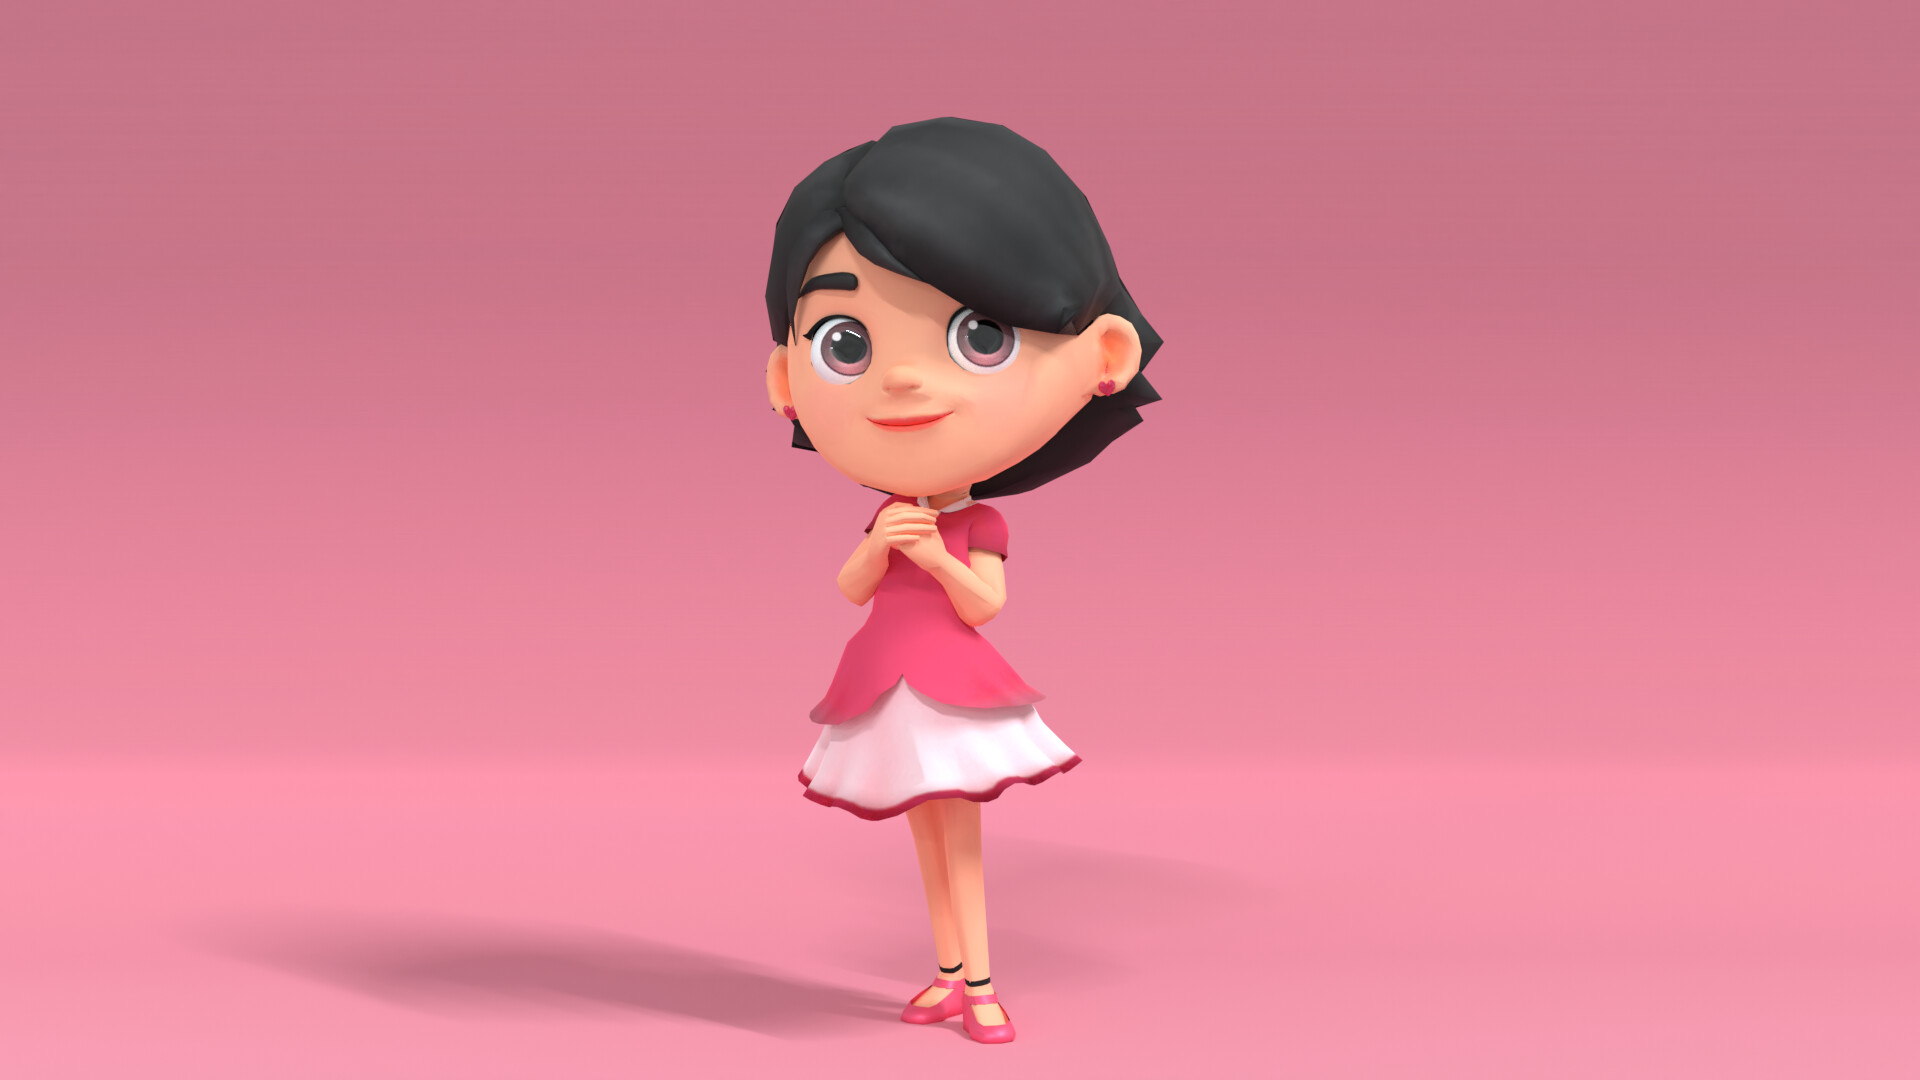 ArtStation - Kid Cartoon Characters : Girl Character 1